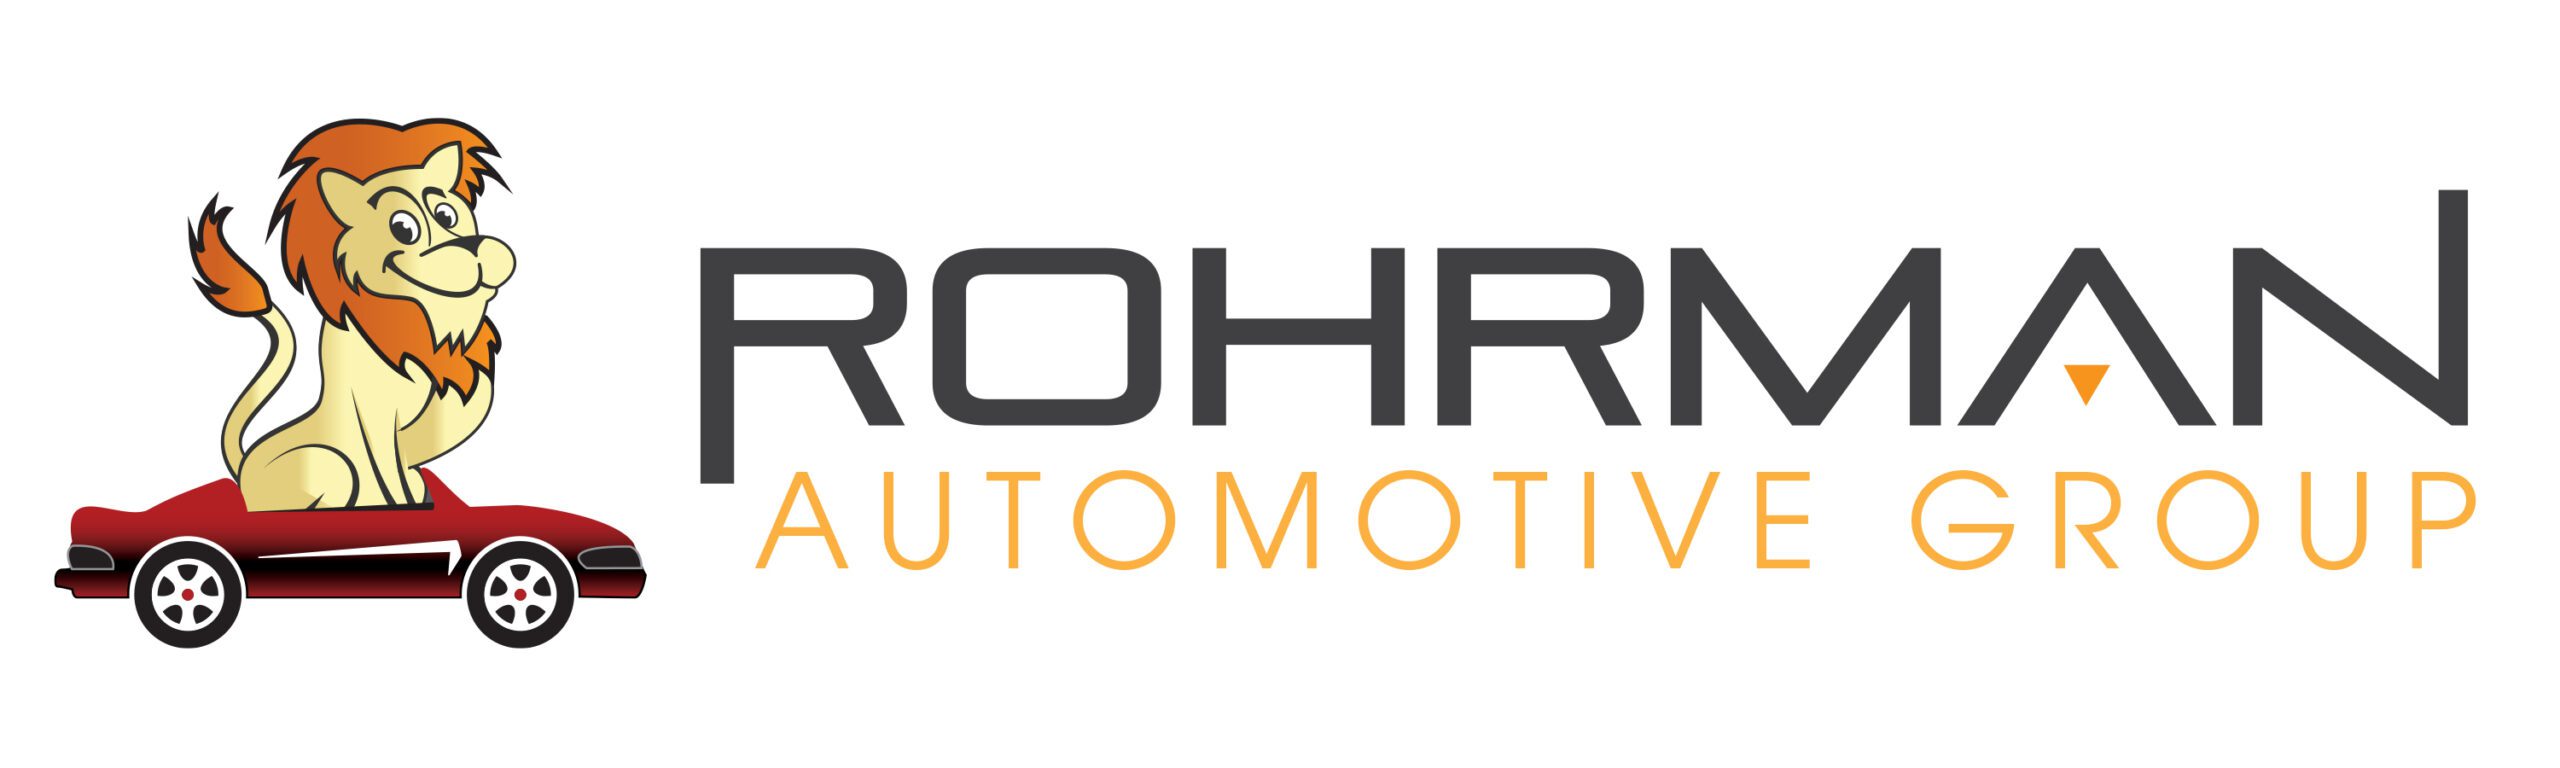 Rohrman Automotive Group Logo